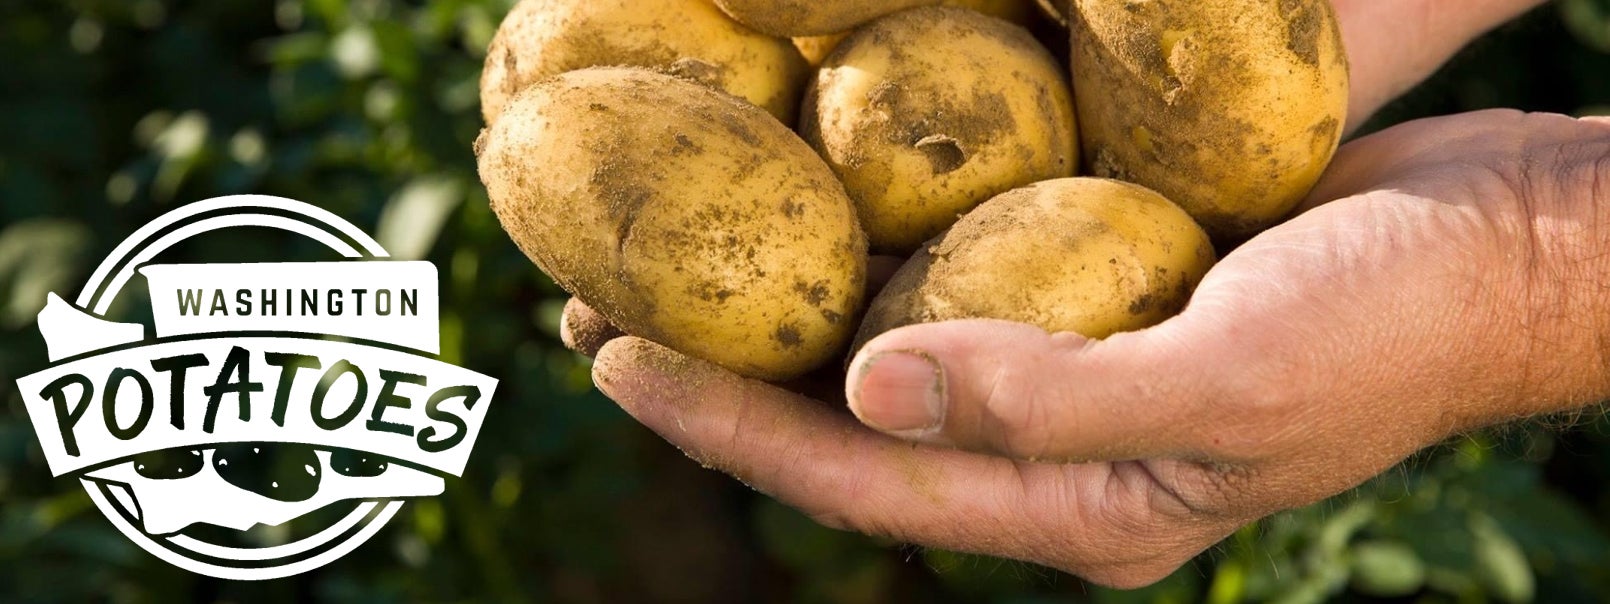 Washington Potato Growers Free Potato Event 